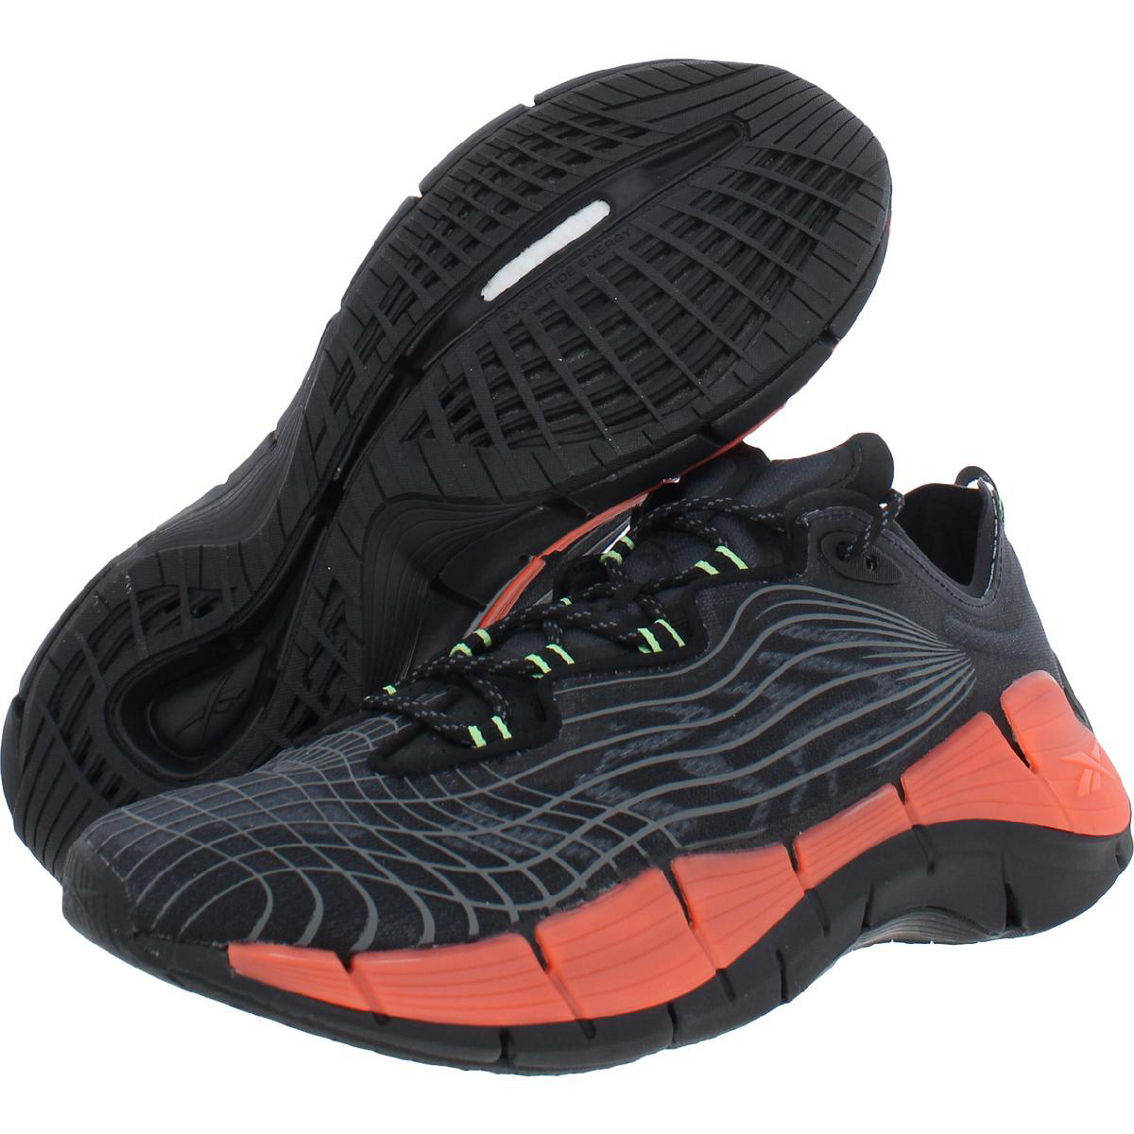 Zig Kinetica II Fitness Workout Running Shoes - Image 2 of 2